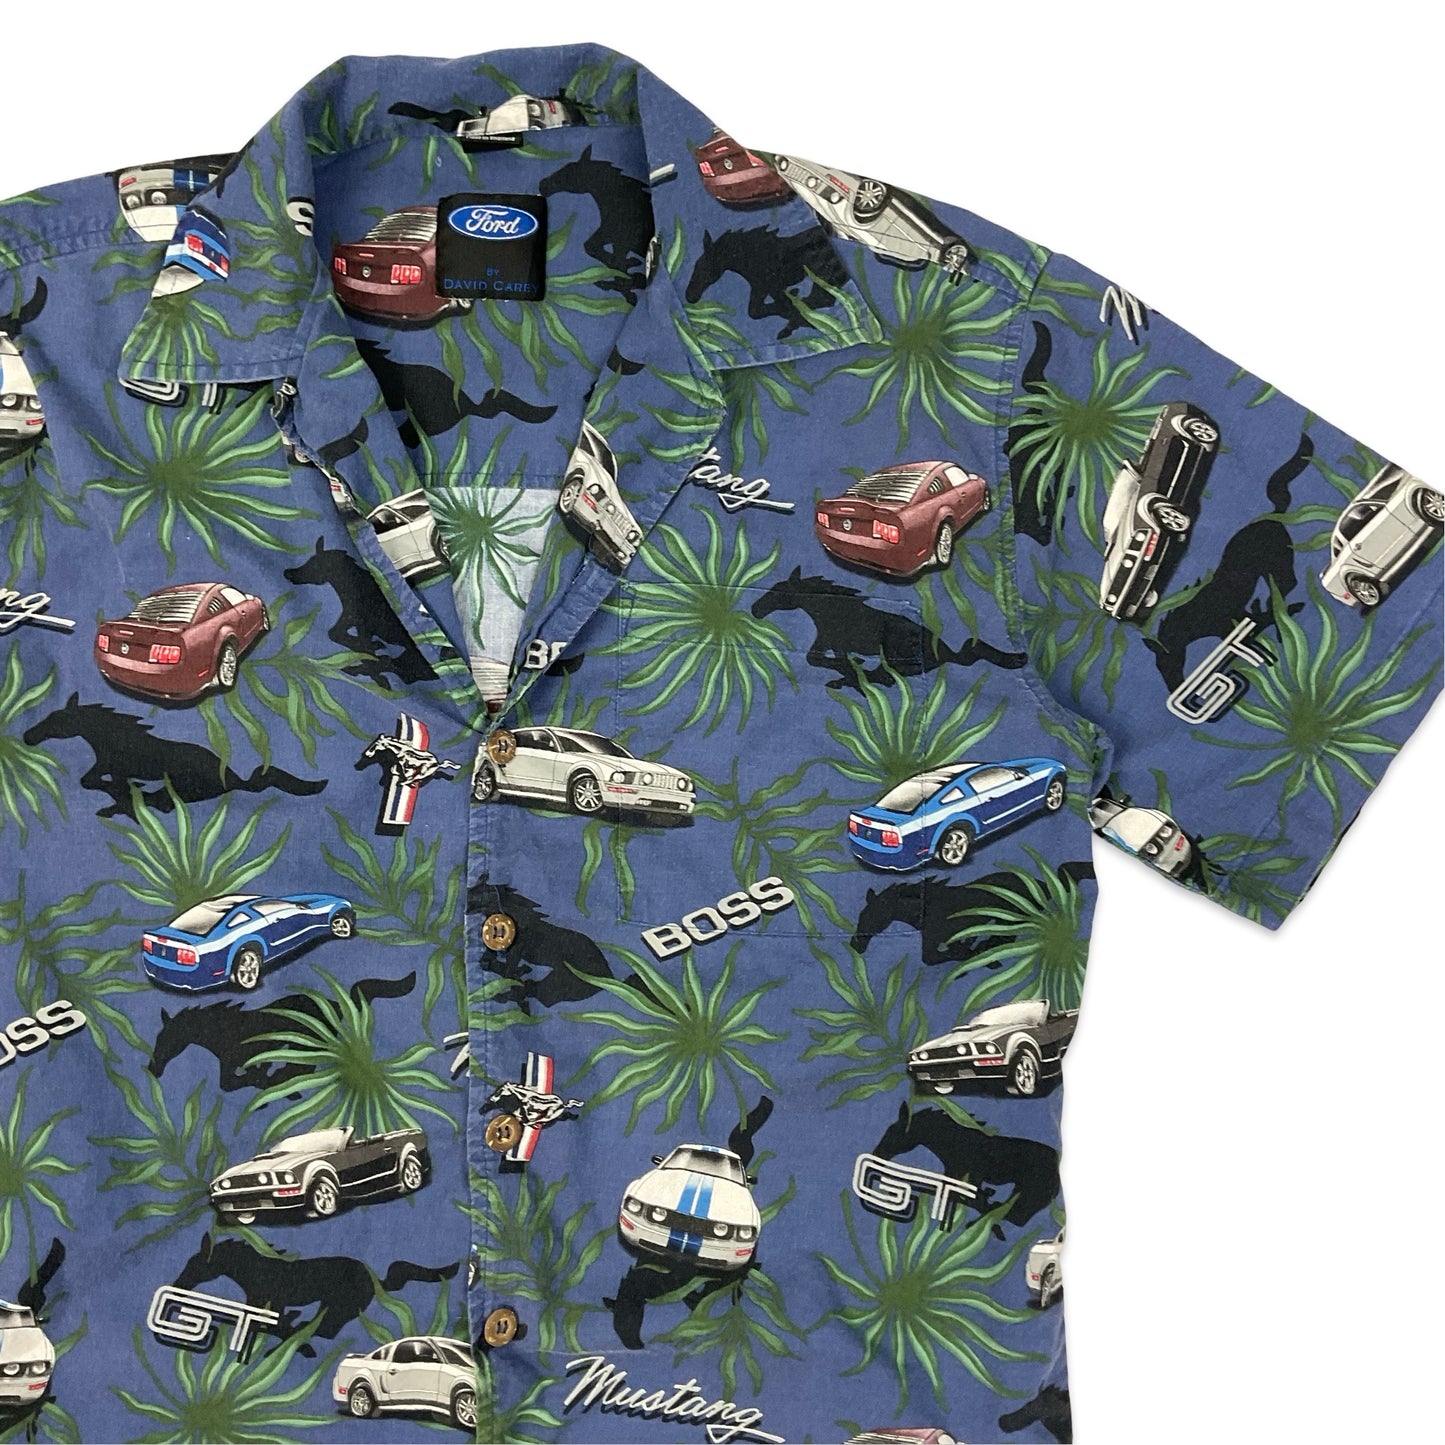 Vintage Ford by David Carey Cars Hawaiian Shirt S M